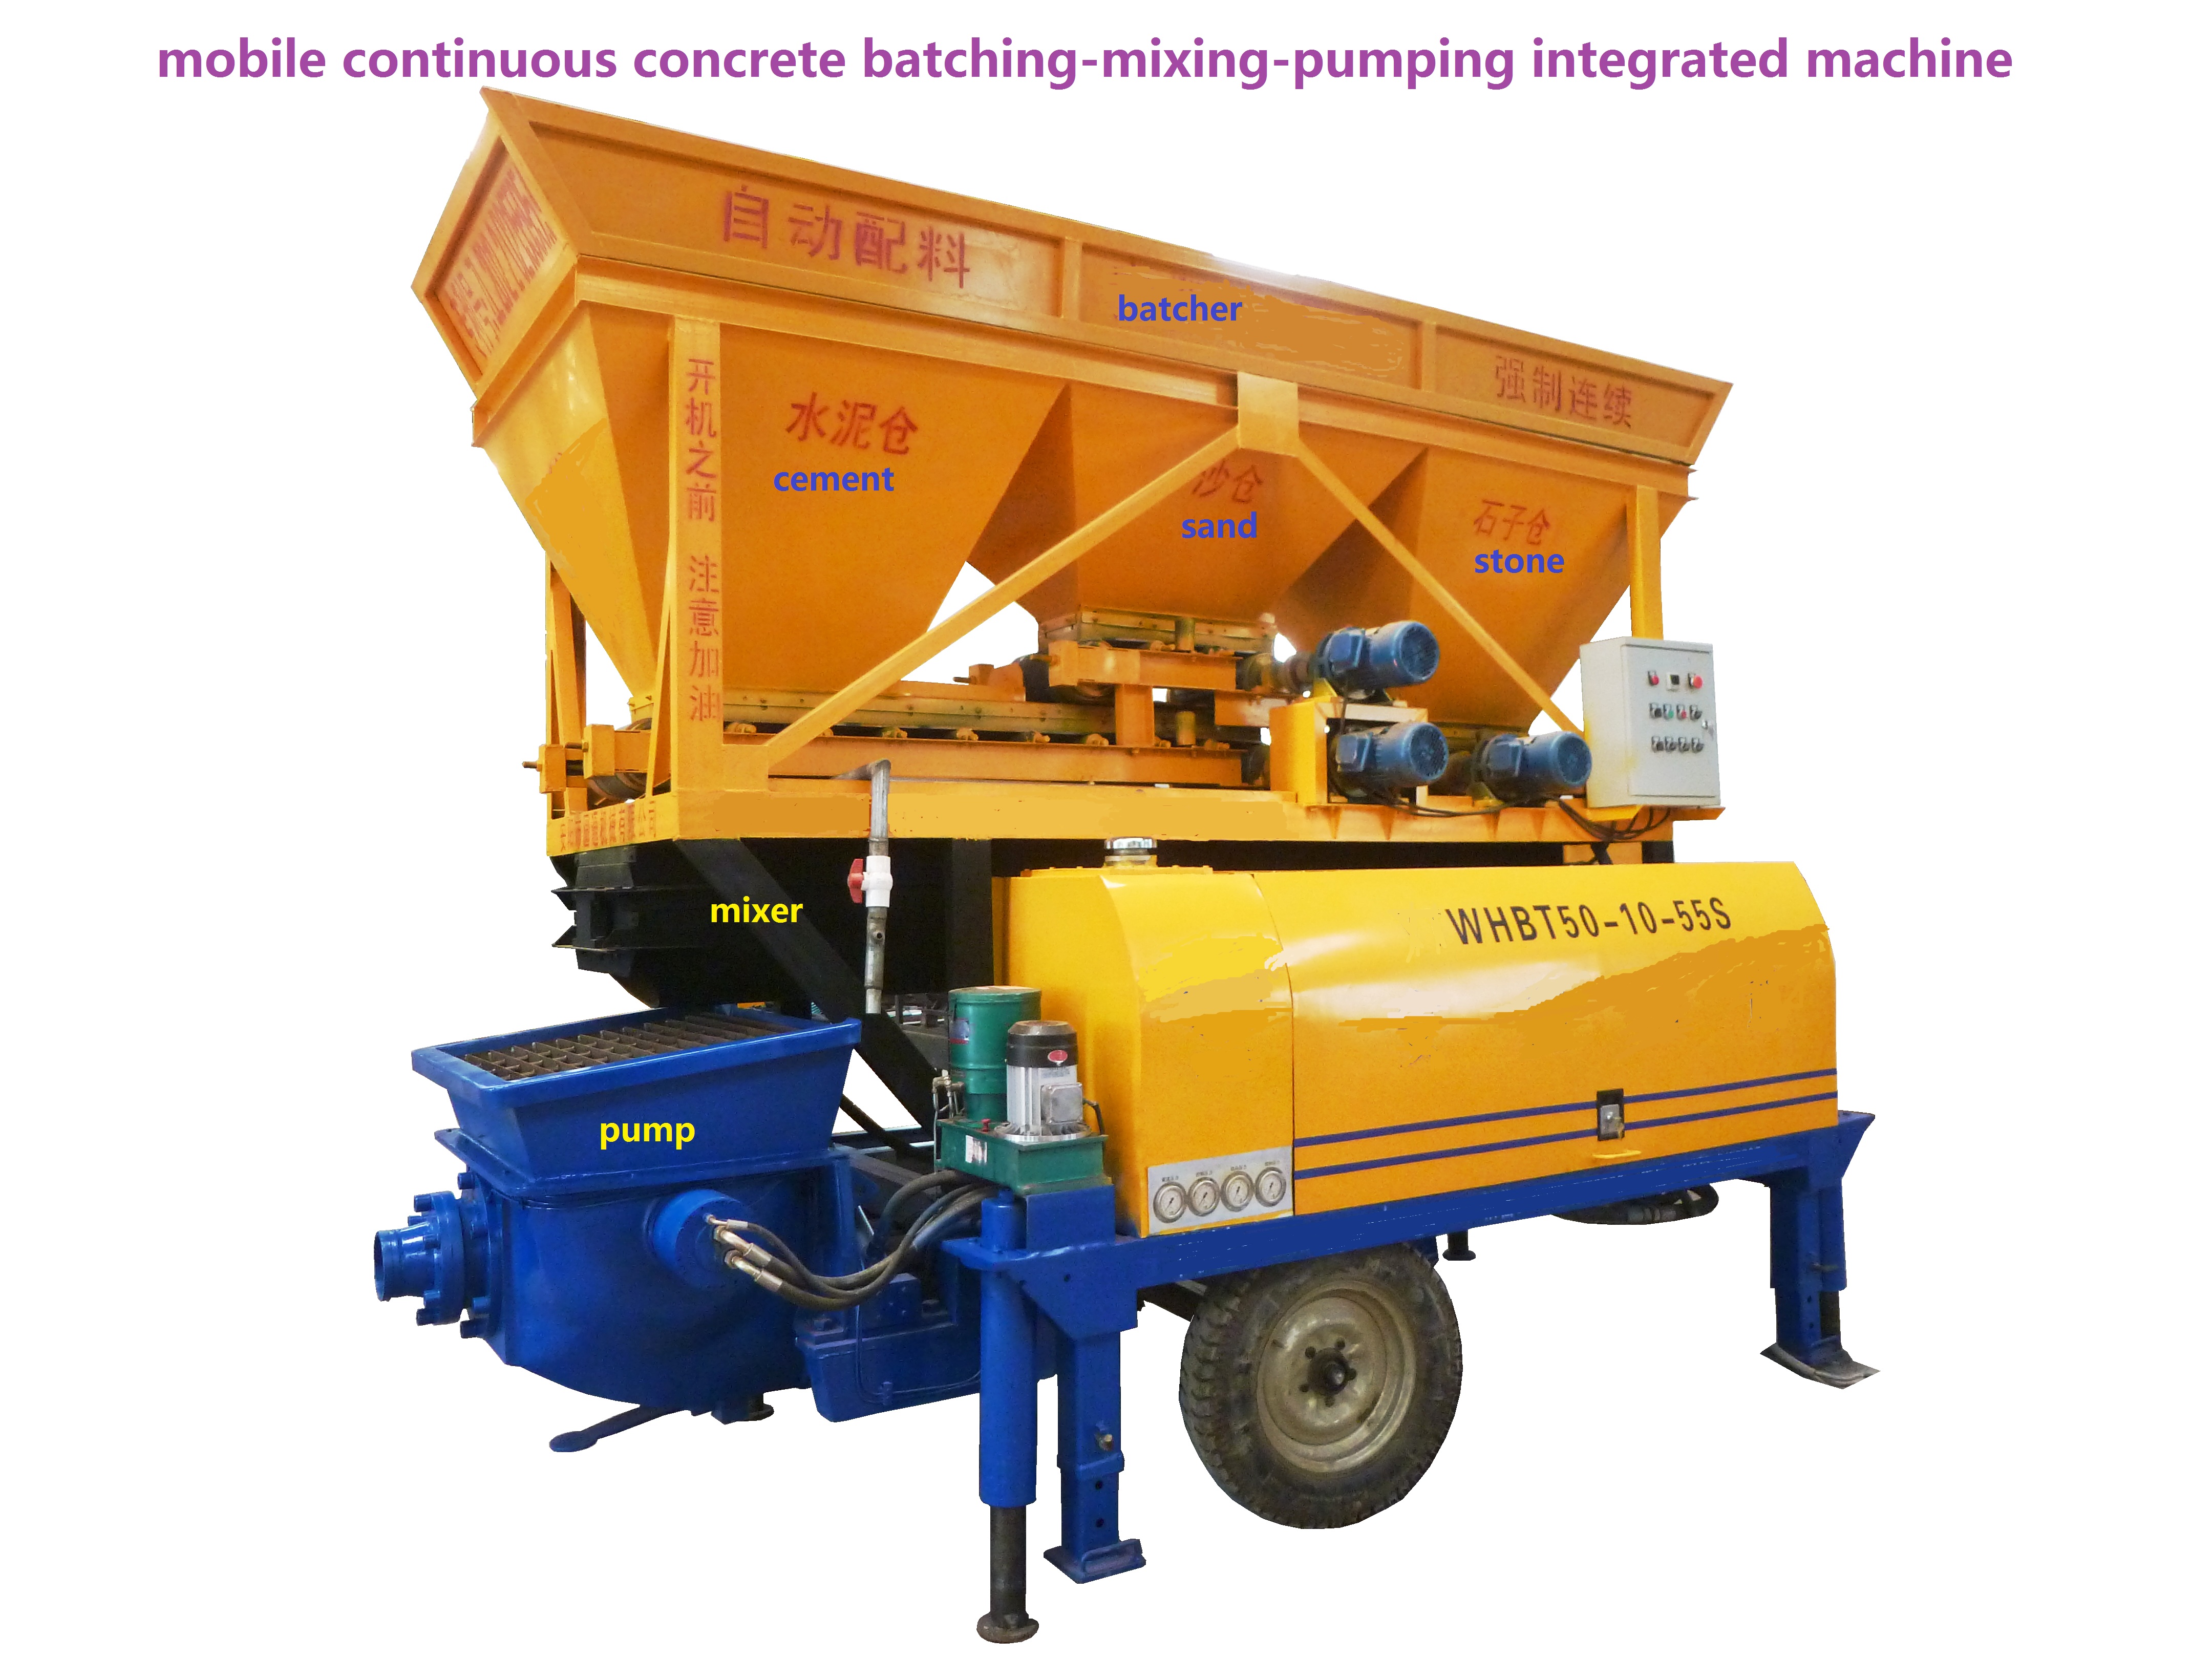 small mobile continus concrete mixing /pumping machine